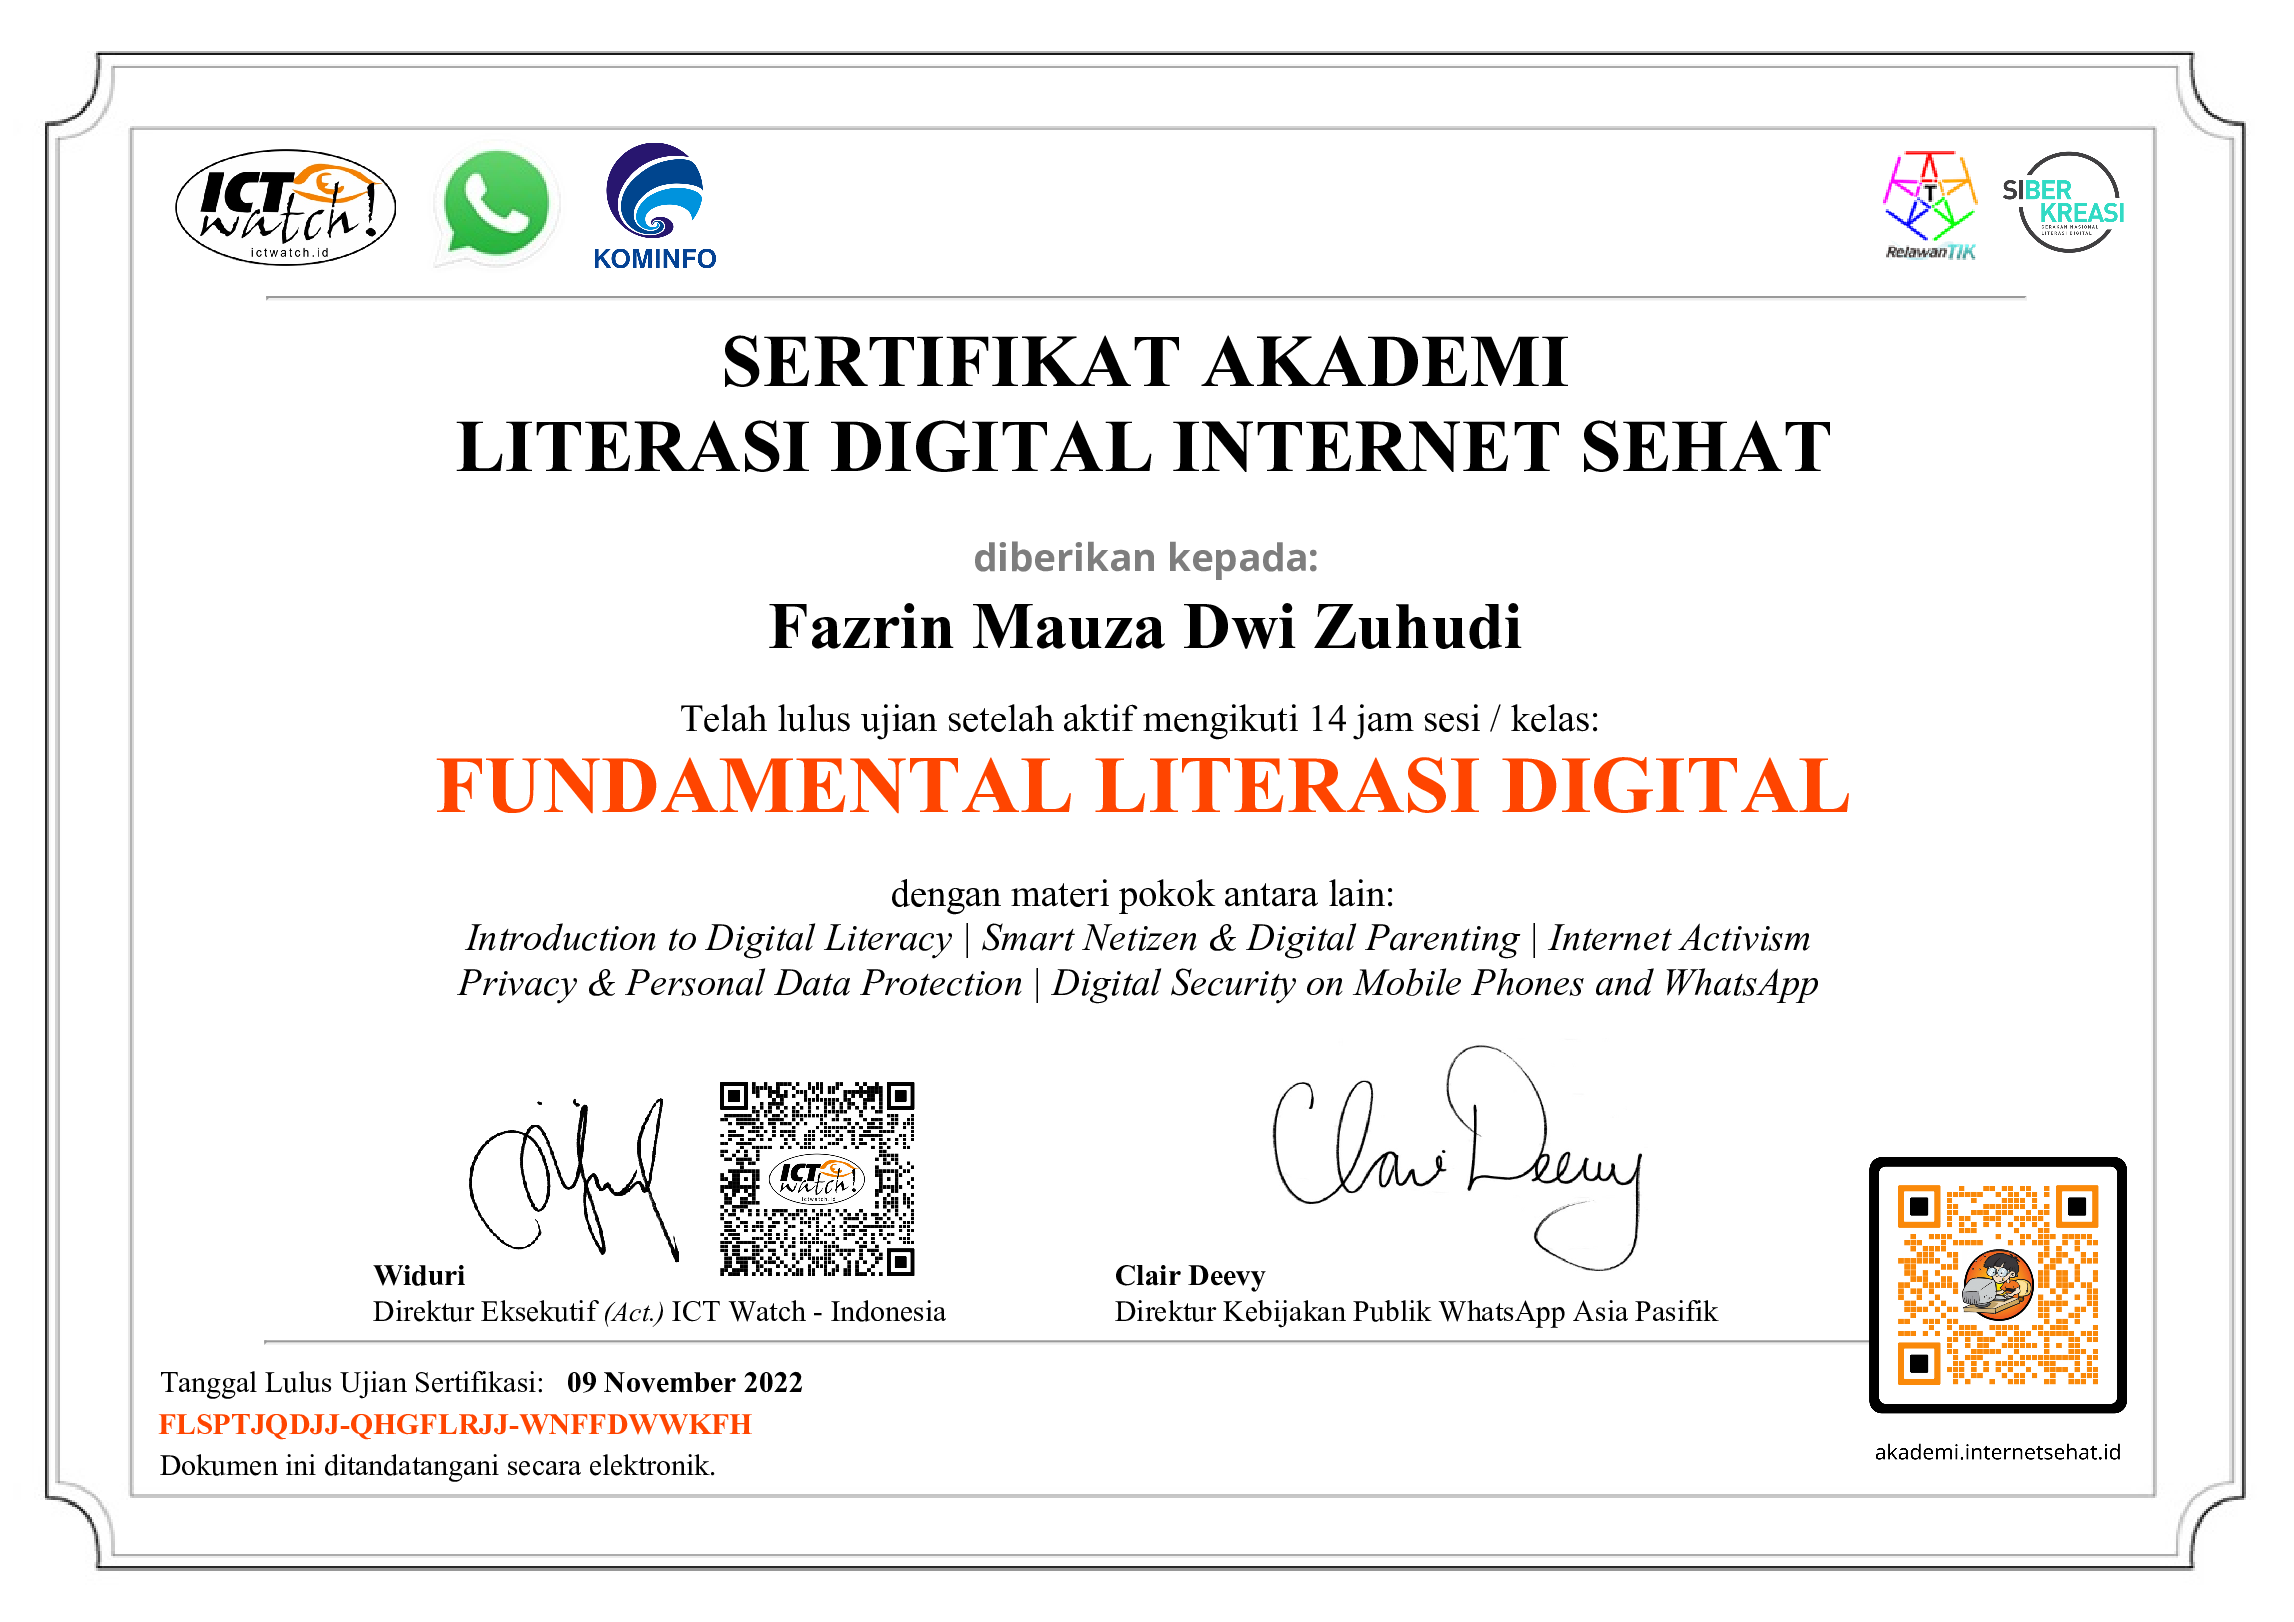 Fundamental Literasi Digital